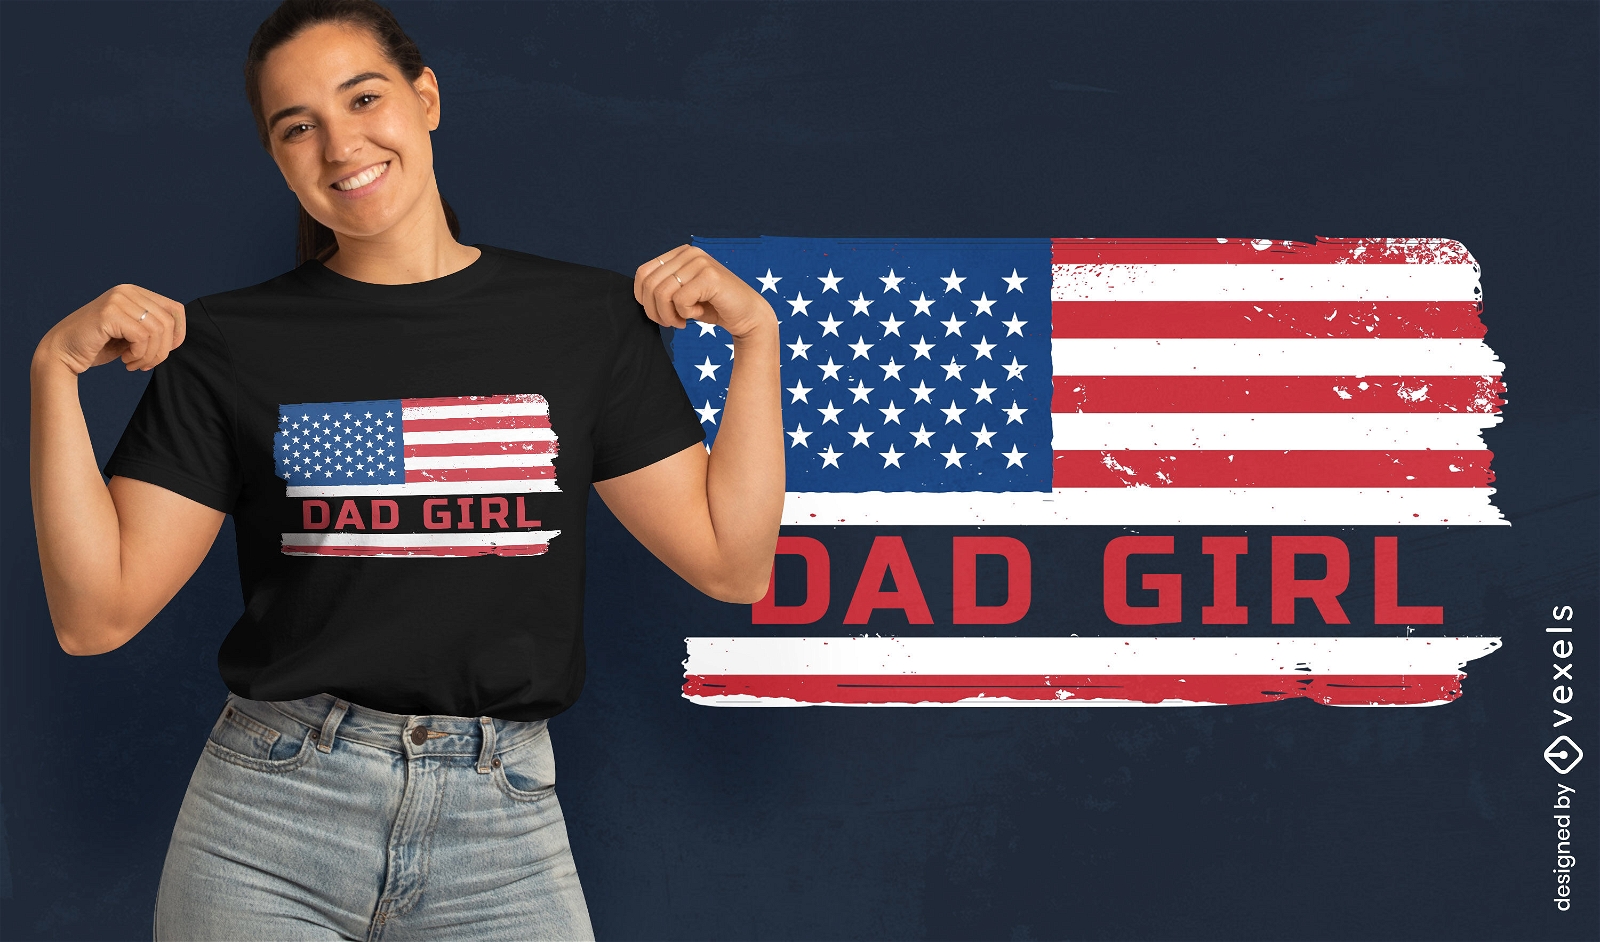 Dad girl US flag t-shirt design